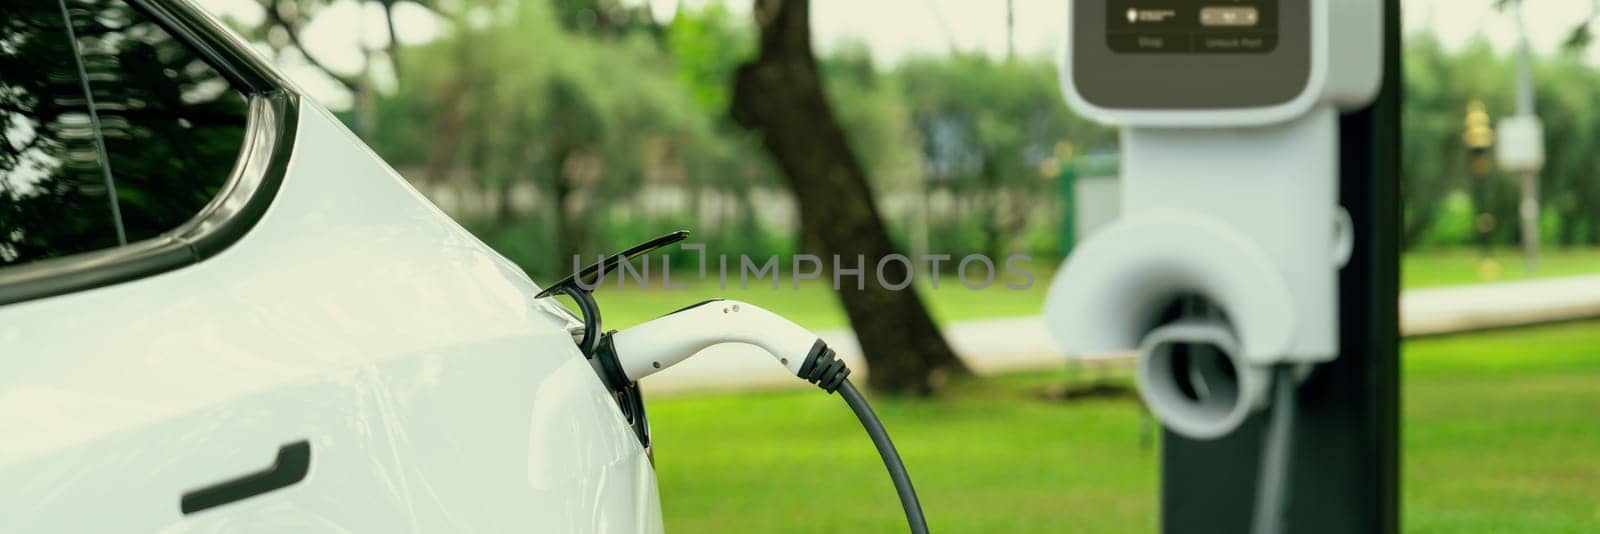 EV vehicle recharging from EV charging station in green city park Exalt by biancoblue